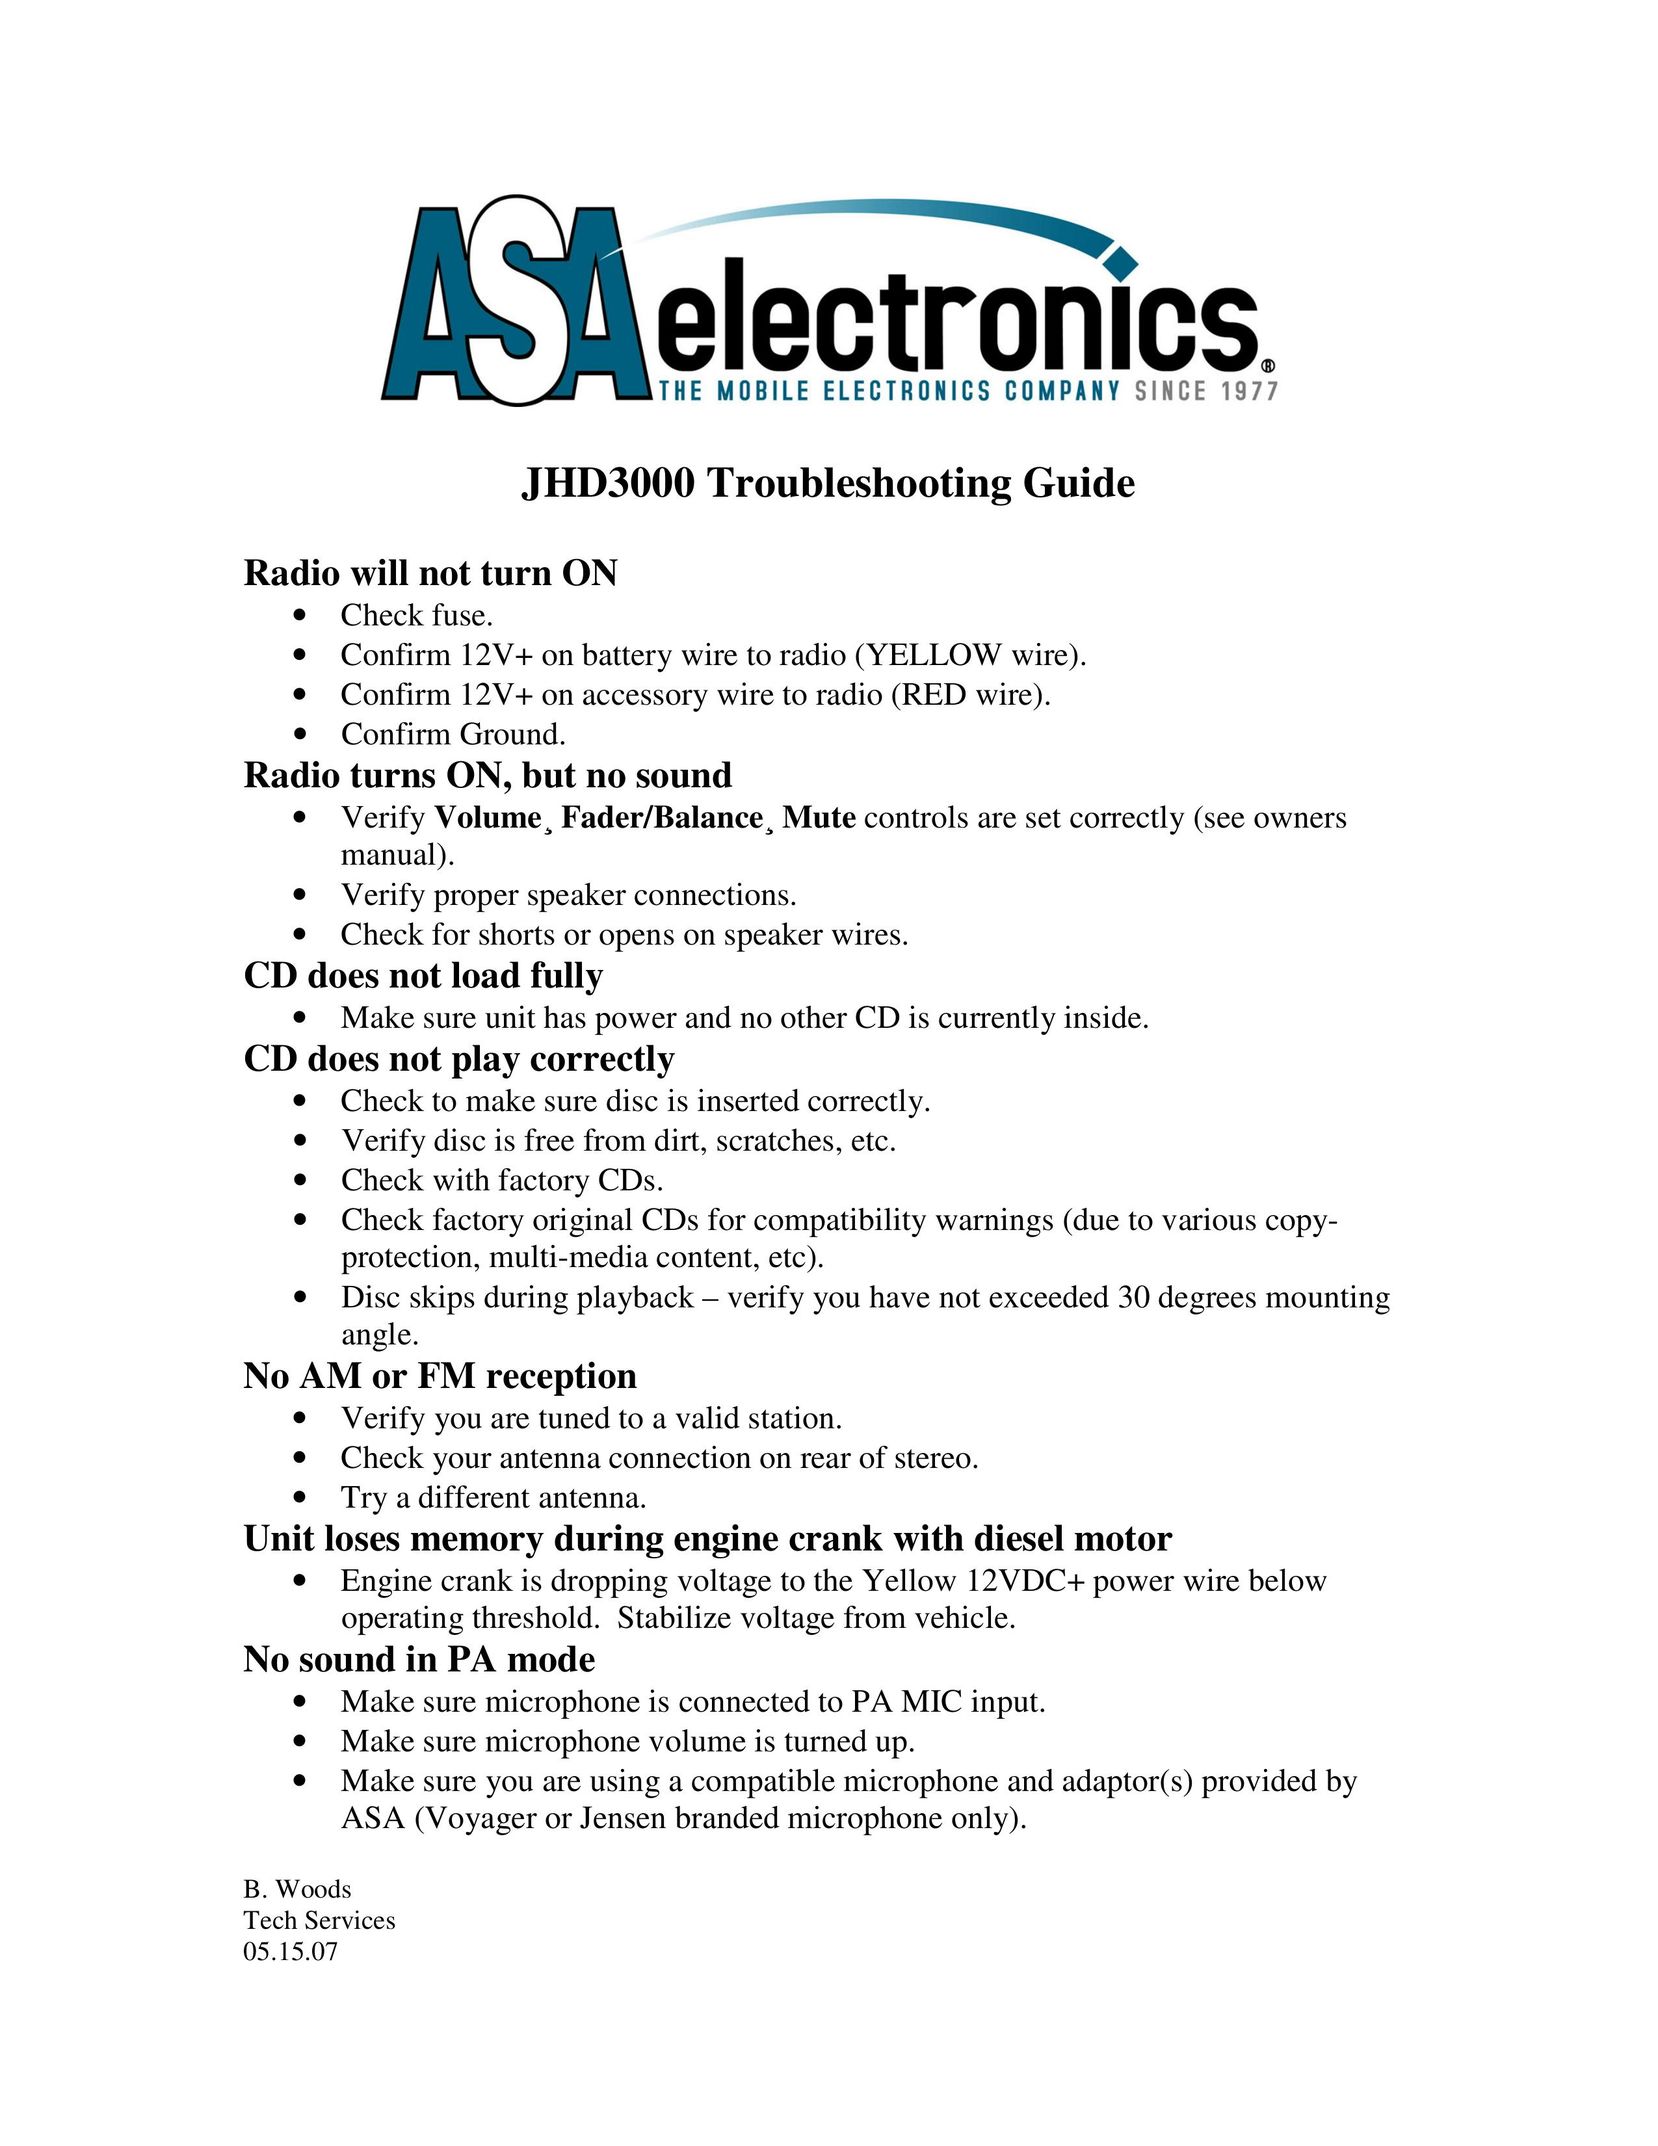 ASA Electronics JHD3000 Car Stereo System User Manual